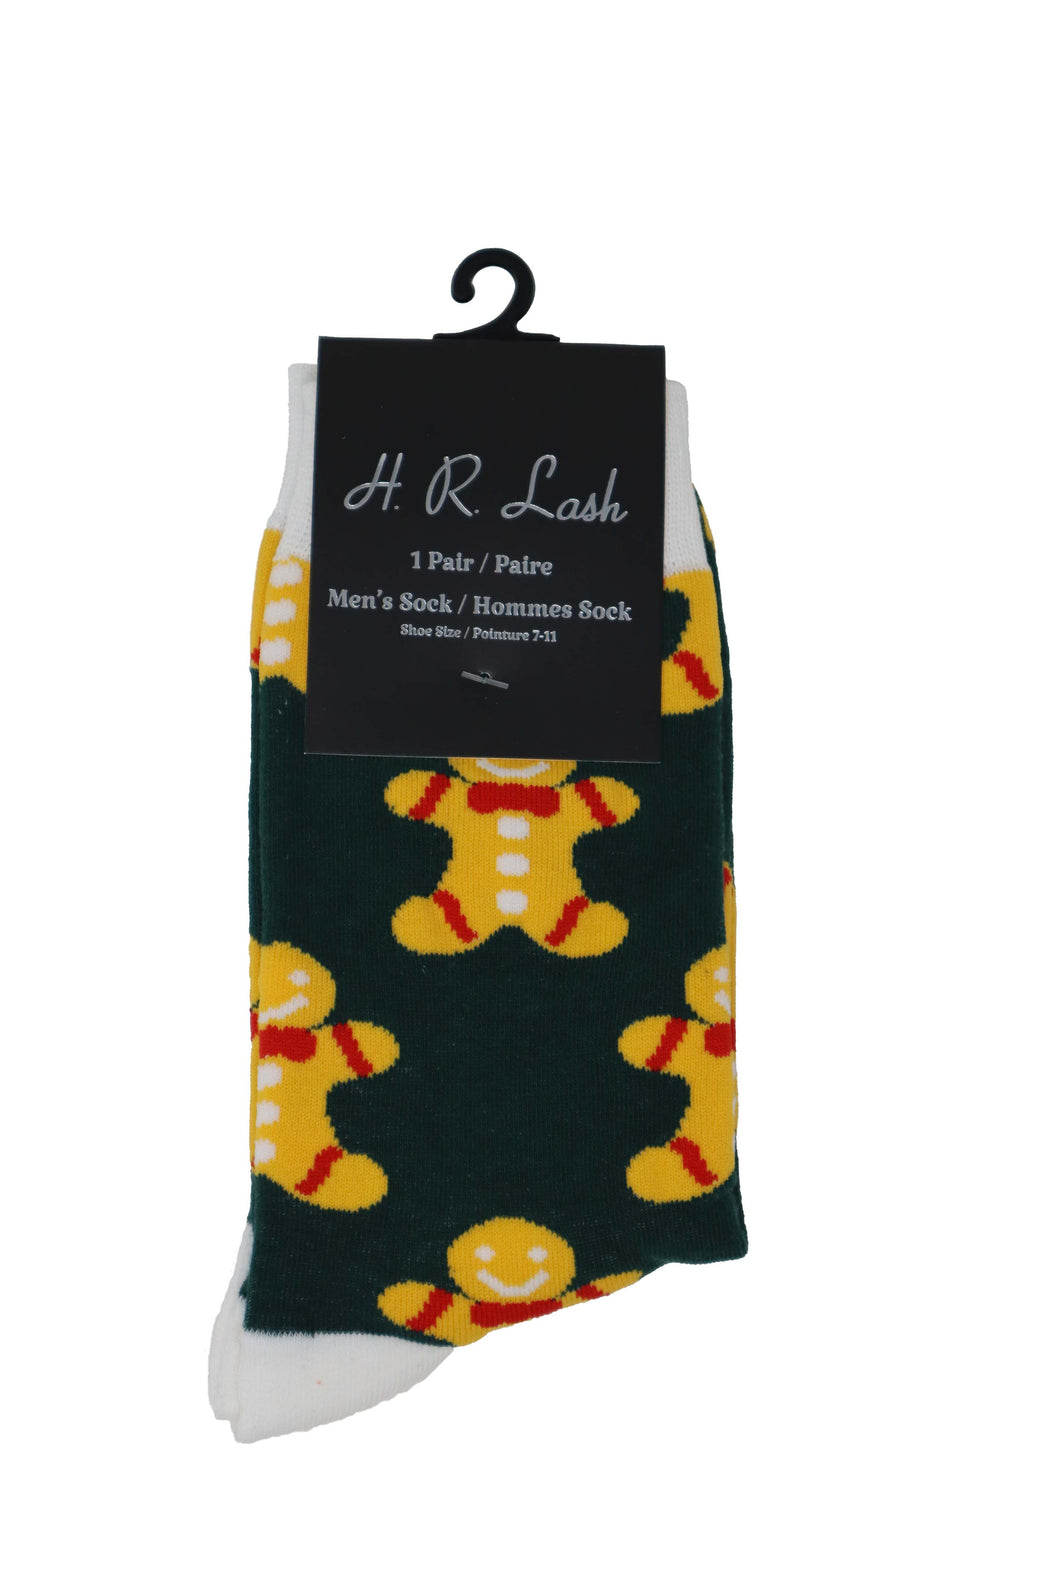 H. R. Lash | FS262 | Fun Socks | Gingerbread Man